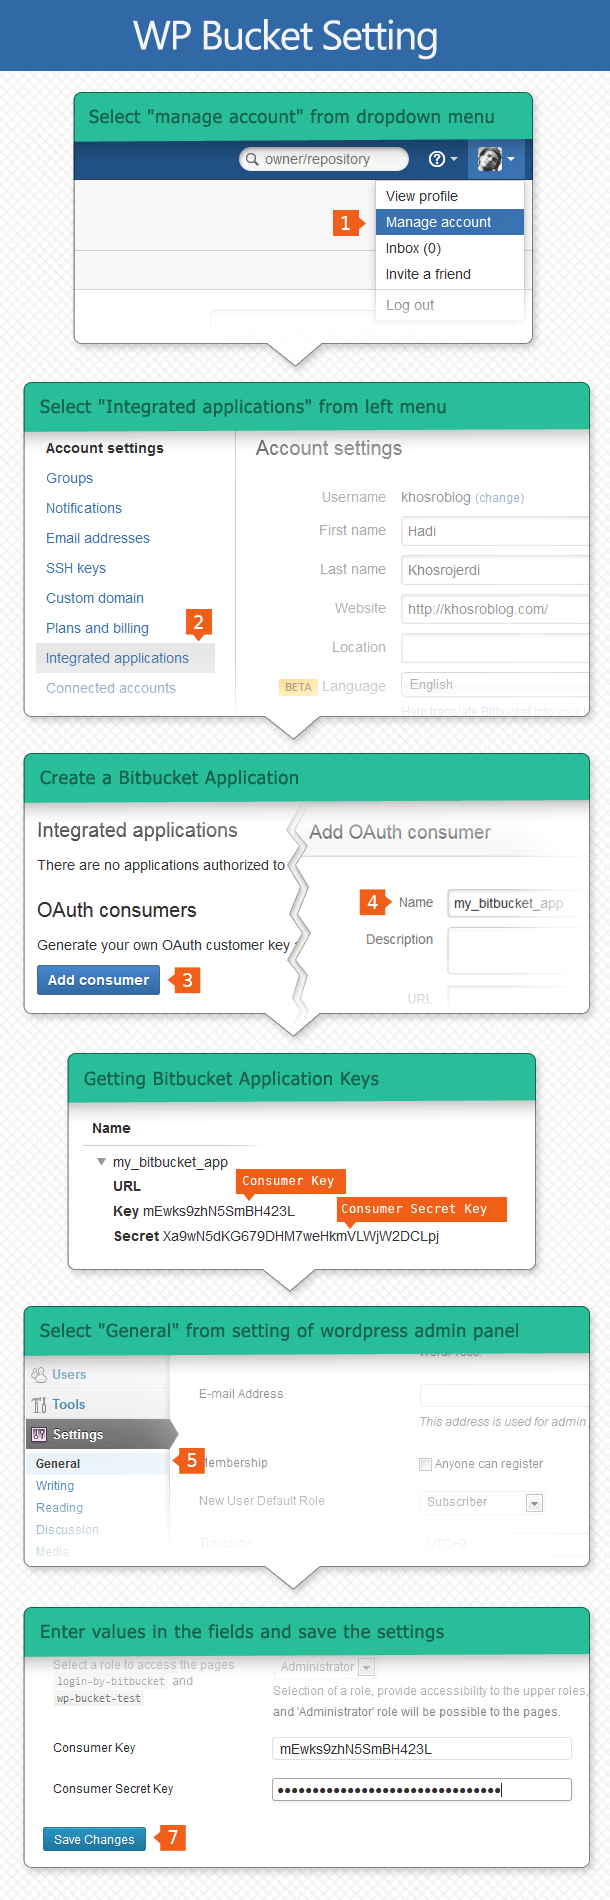 Create a Bitbucket Application